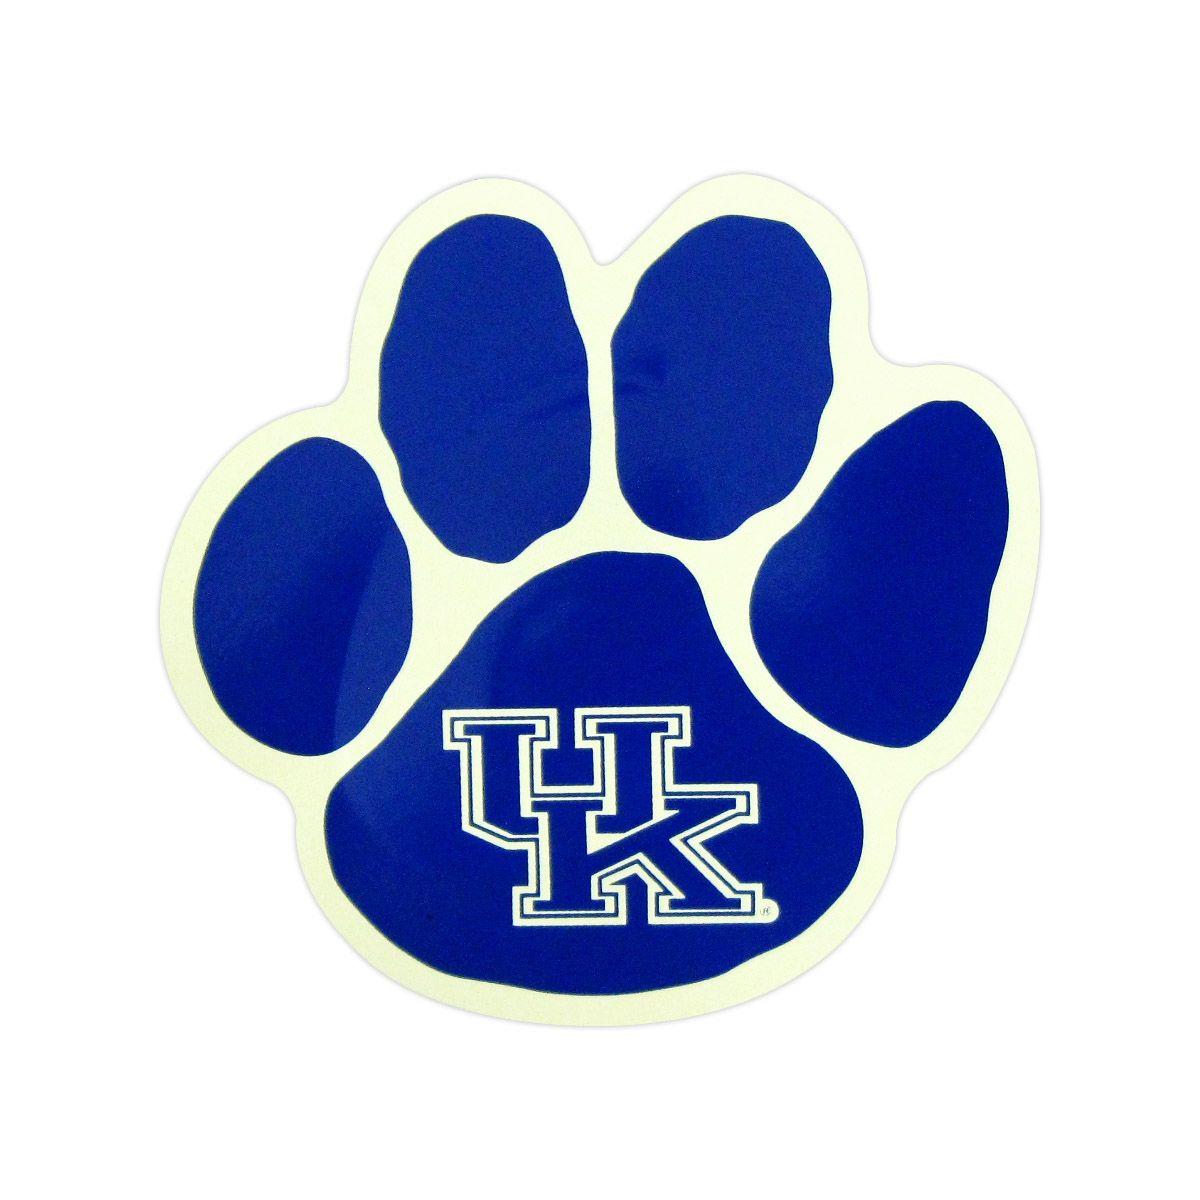 Wildcat Paw Logo - Kentucky Wildcat Paw Logo free image